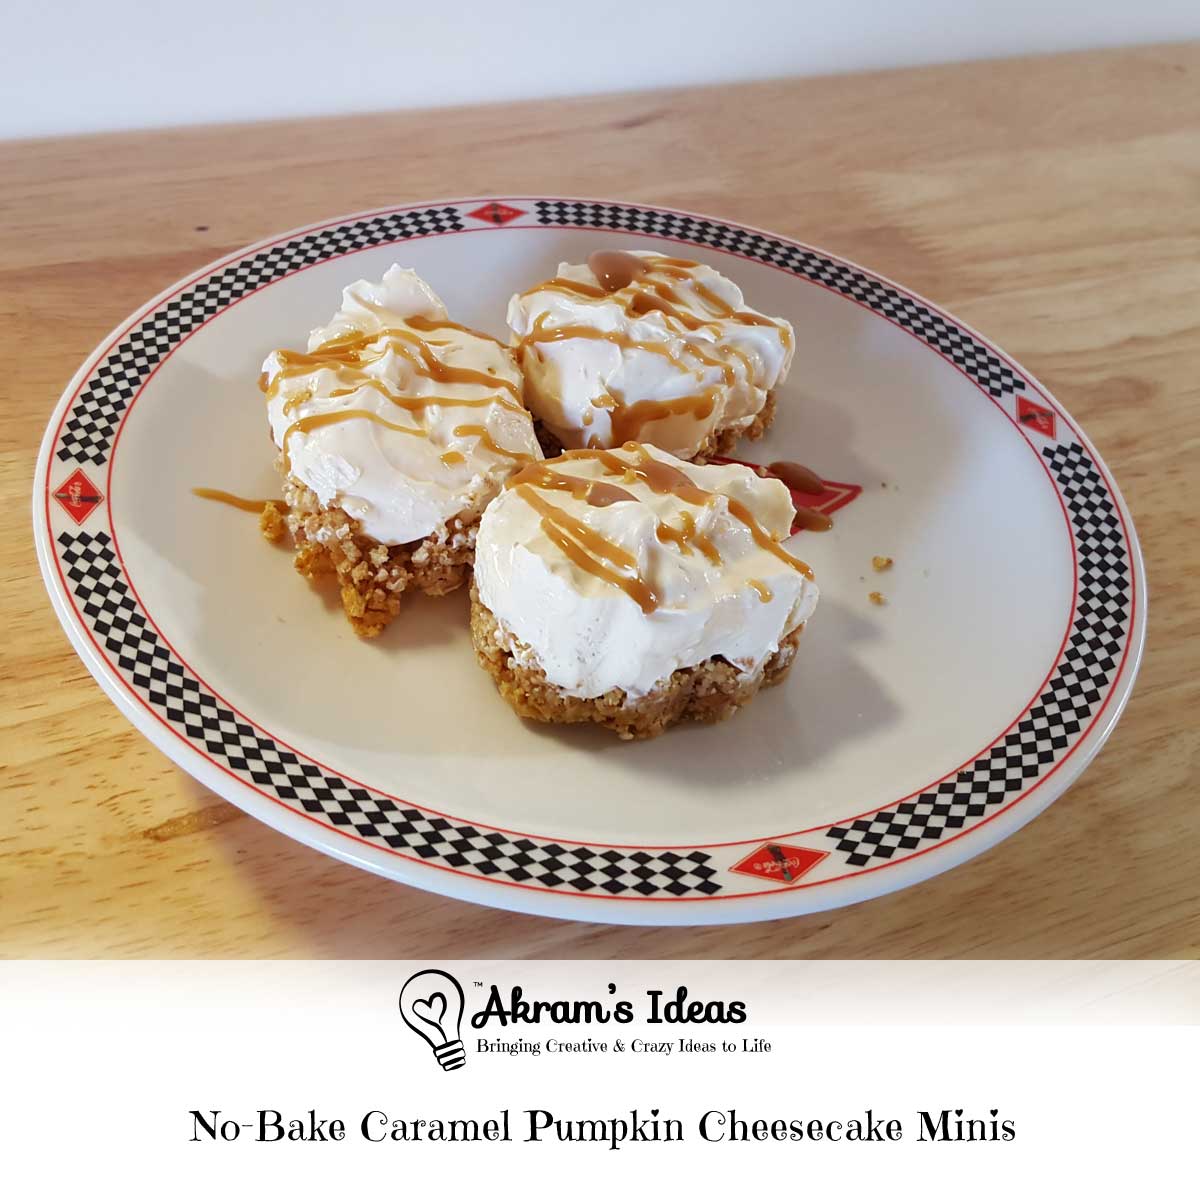 Akram's Ideas: No-Bake Caramel Pumpkin Cheesecake Minis